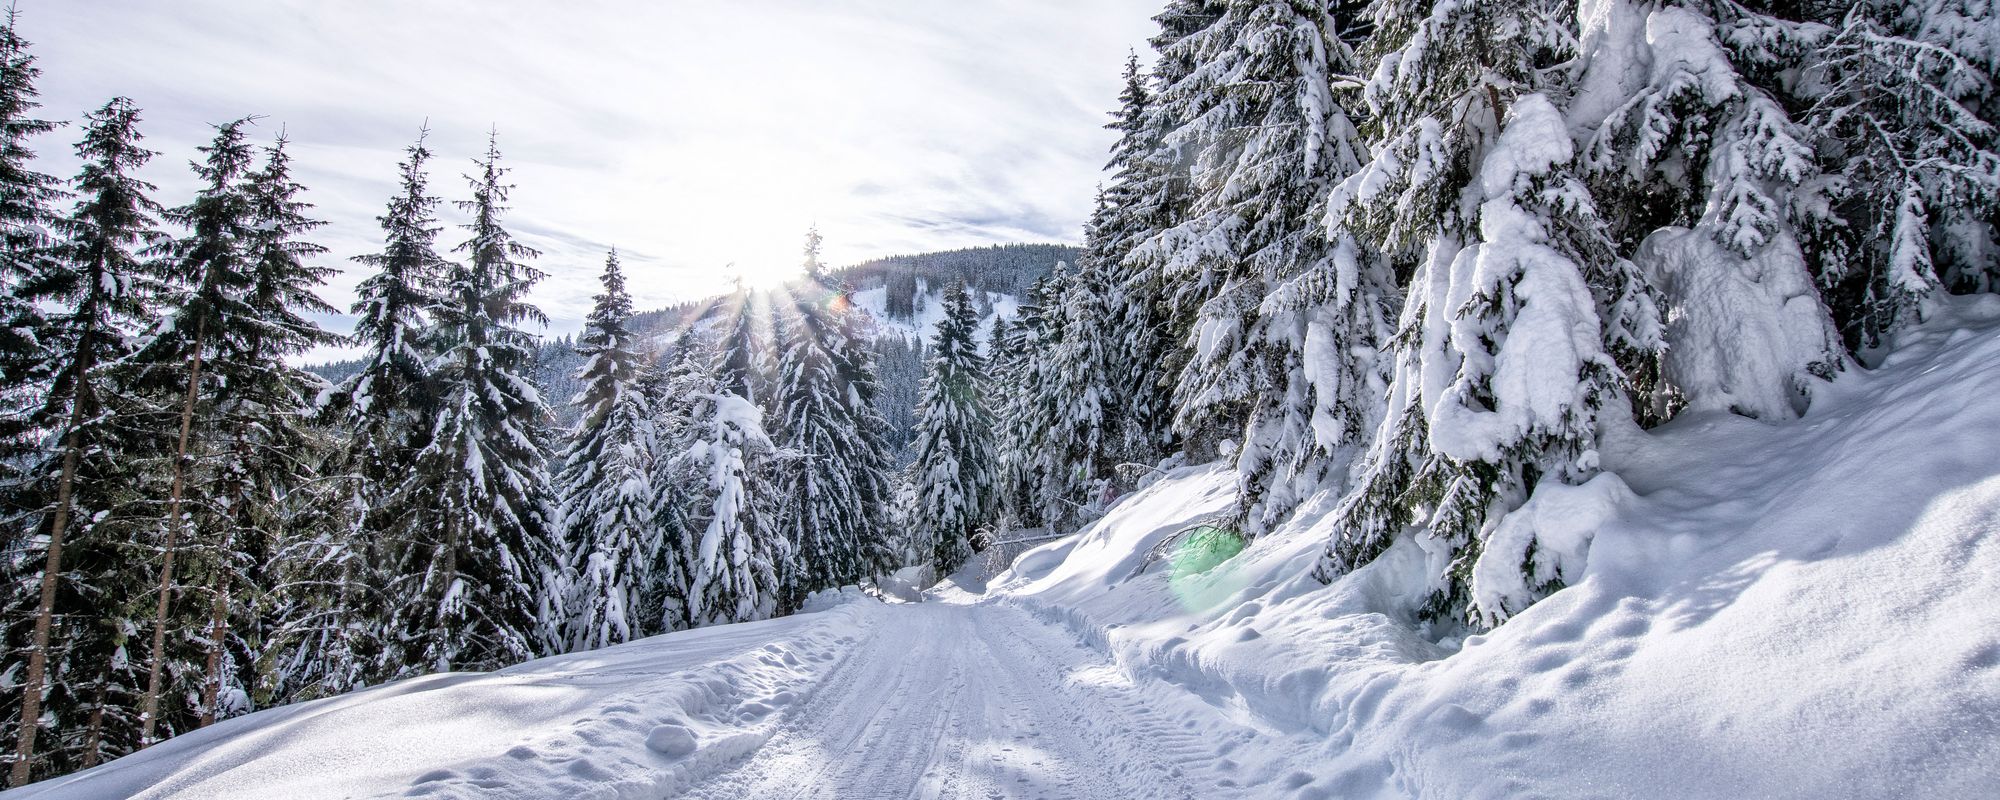 Riedberg Skitour © tvb erste ferienregion /andi-frank